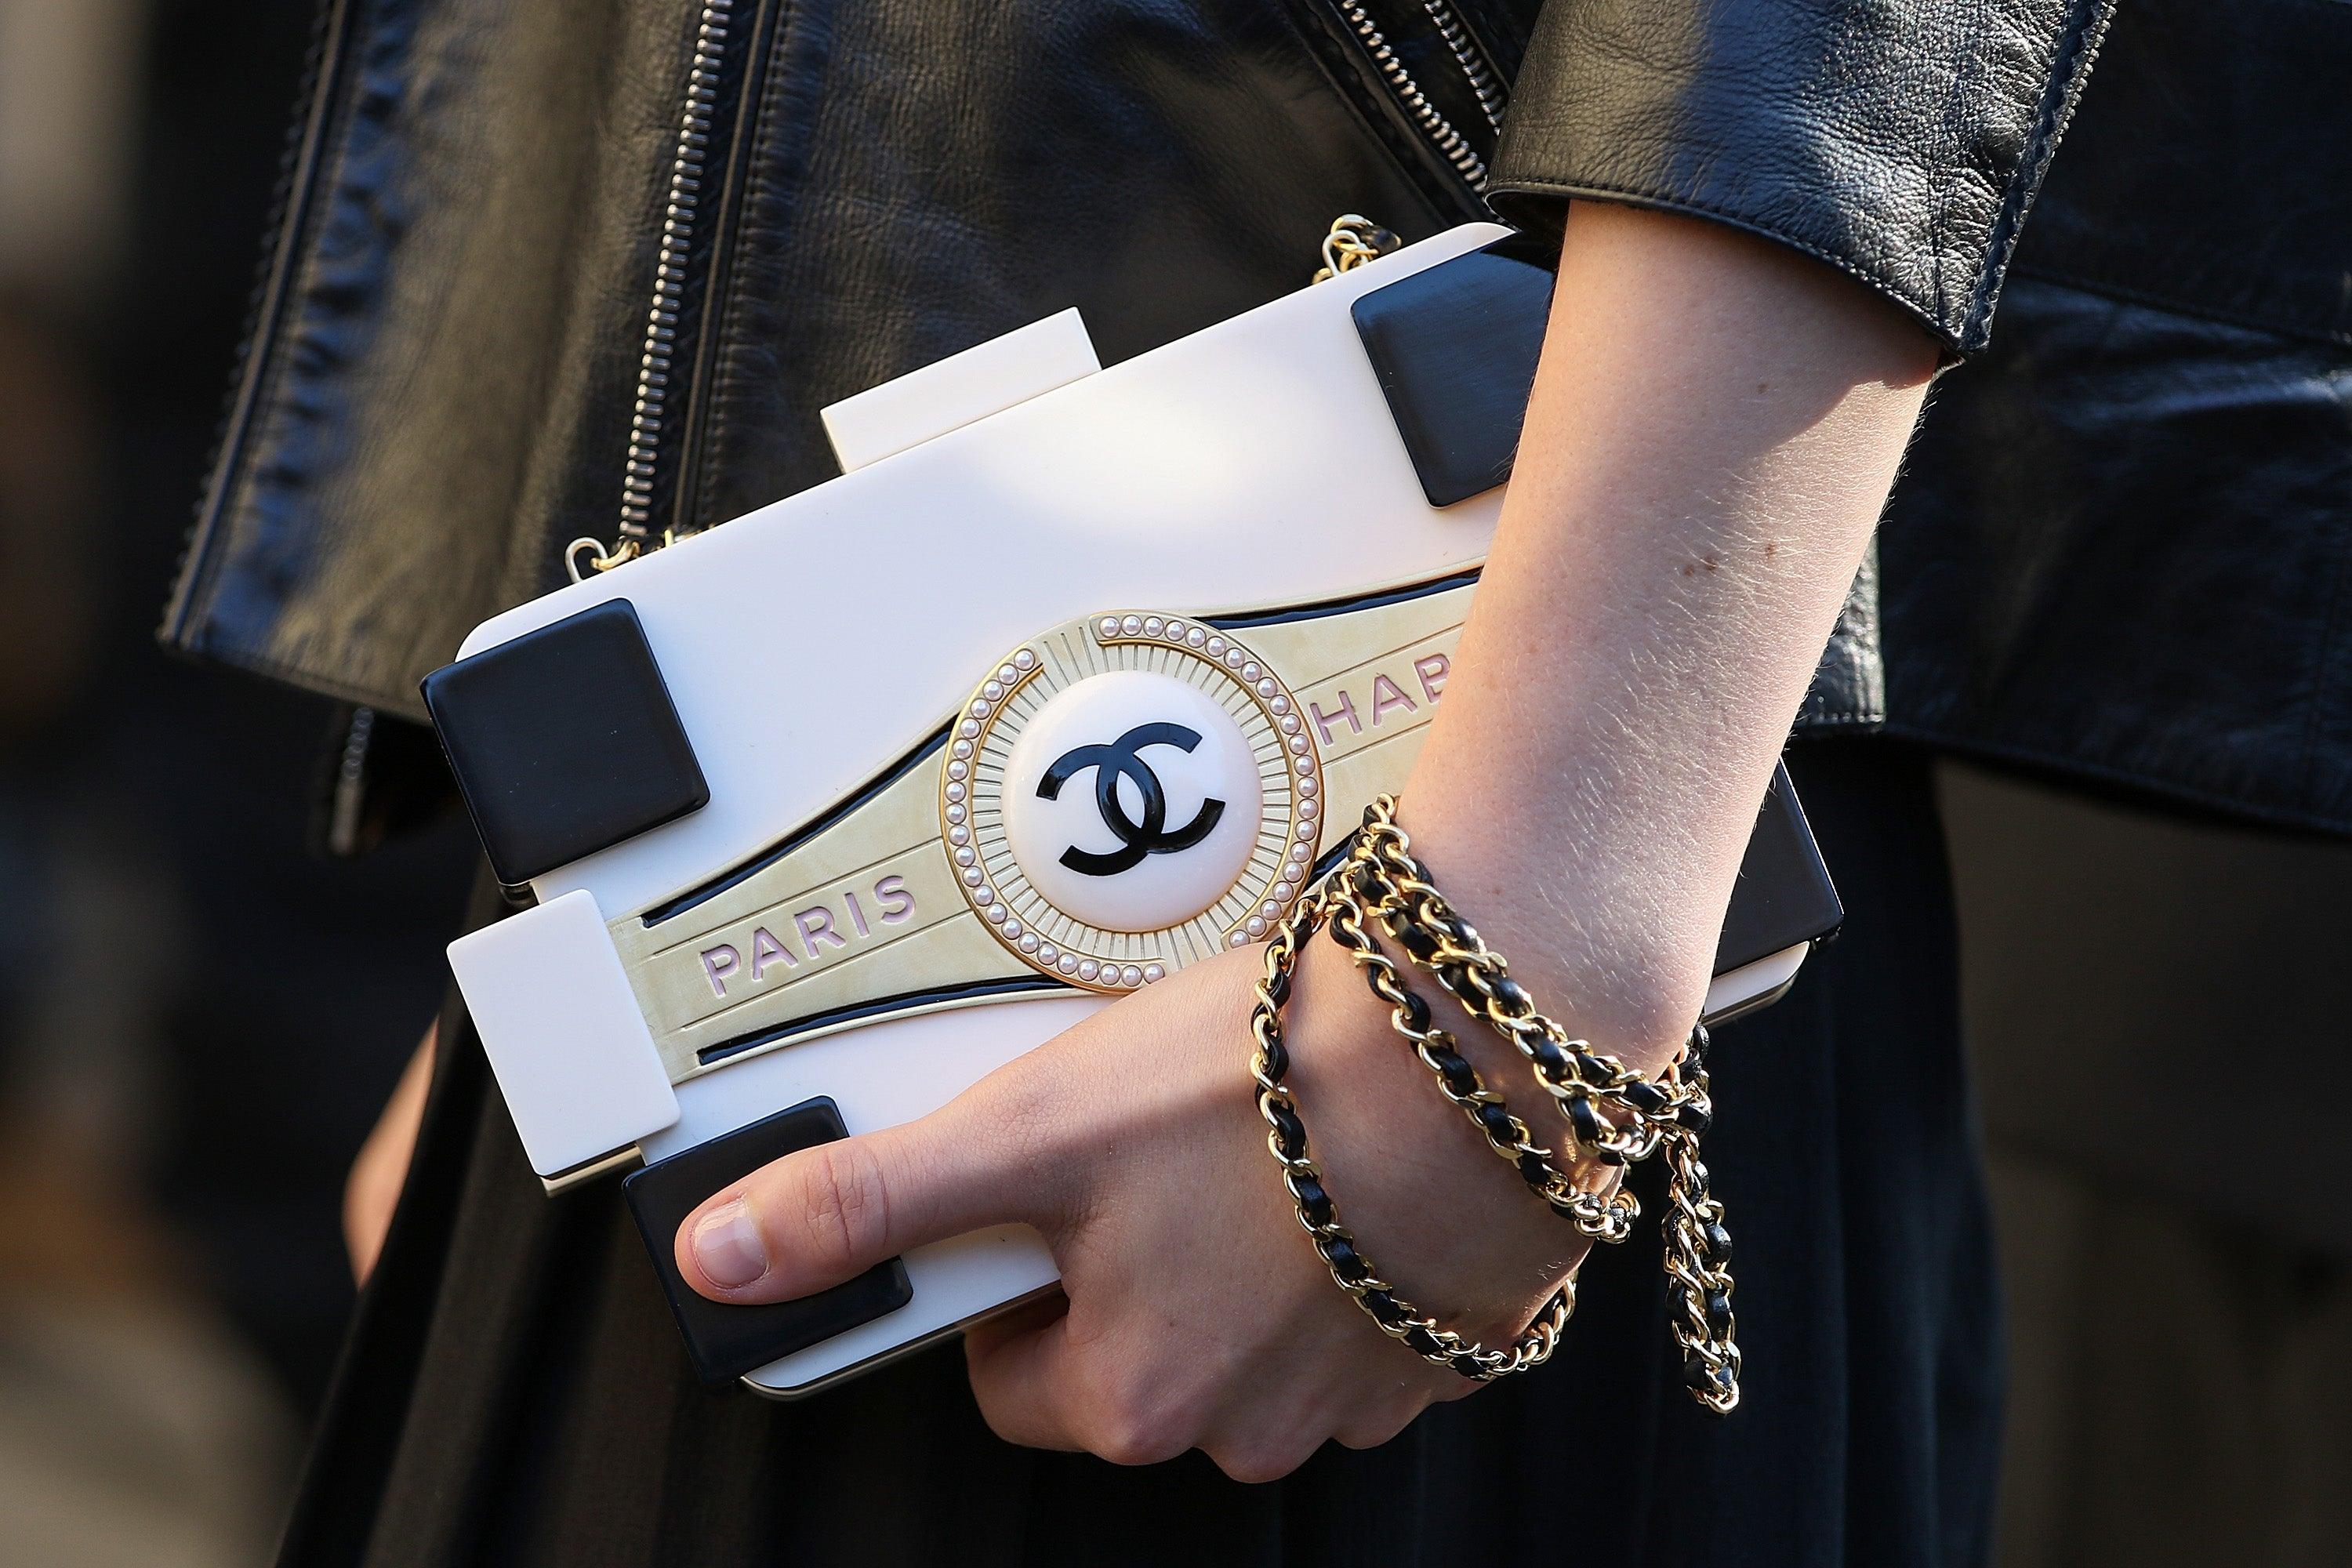 Vintage Chanel Evening Bag Black Quilted Satin – EYECATCHERSLUXE